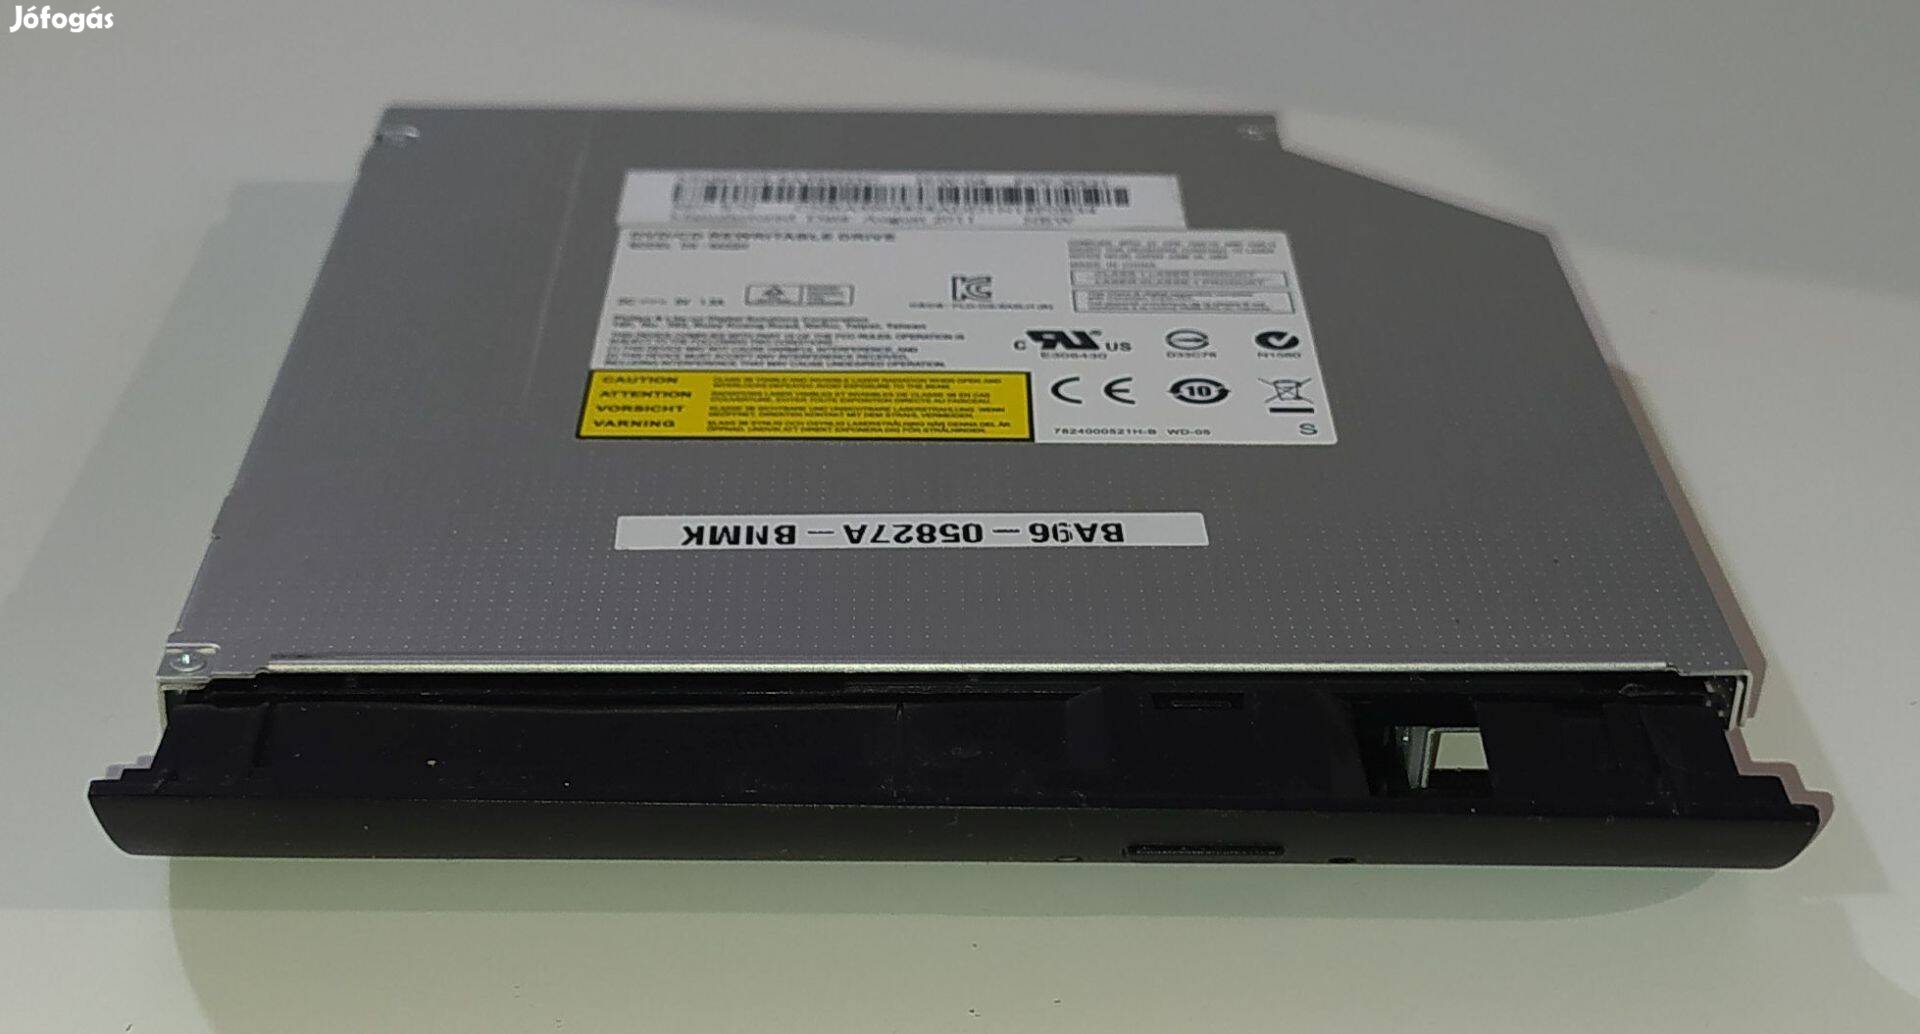 Lite-On DS-8A5SH laptop / notebook DVD író SATA